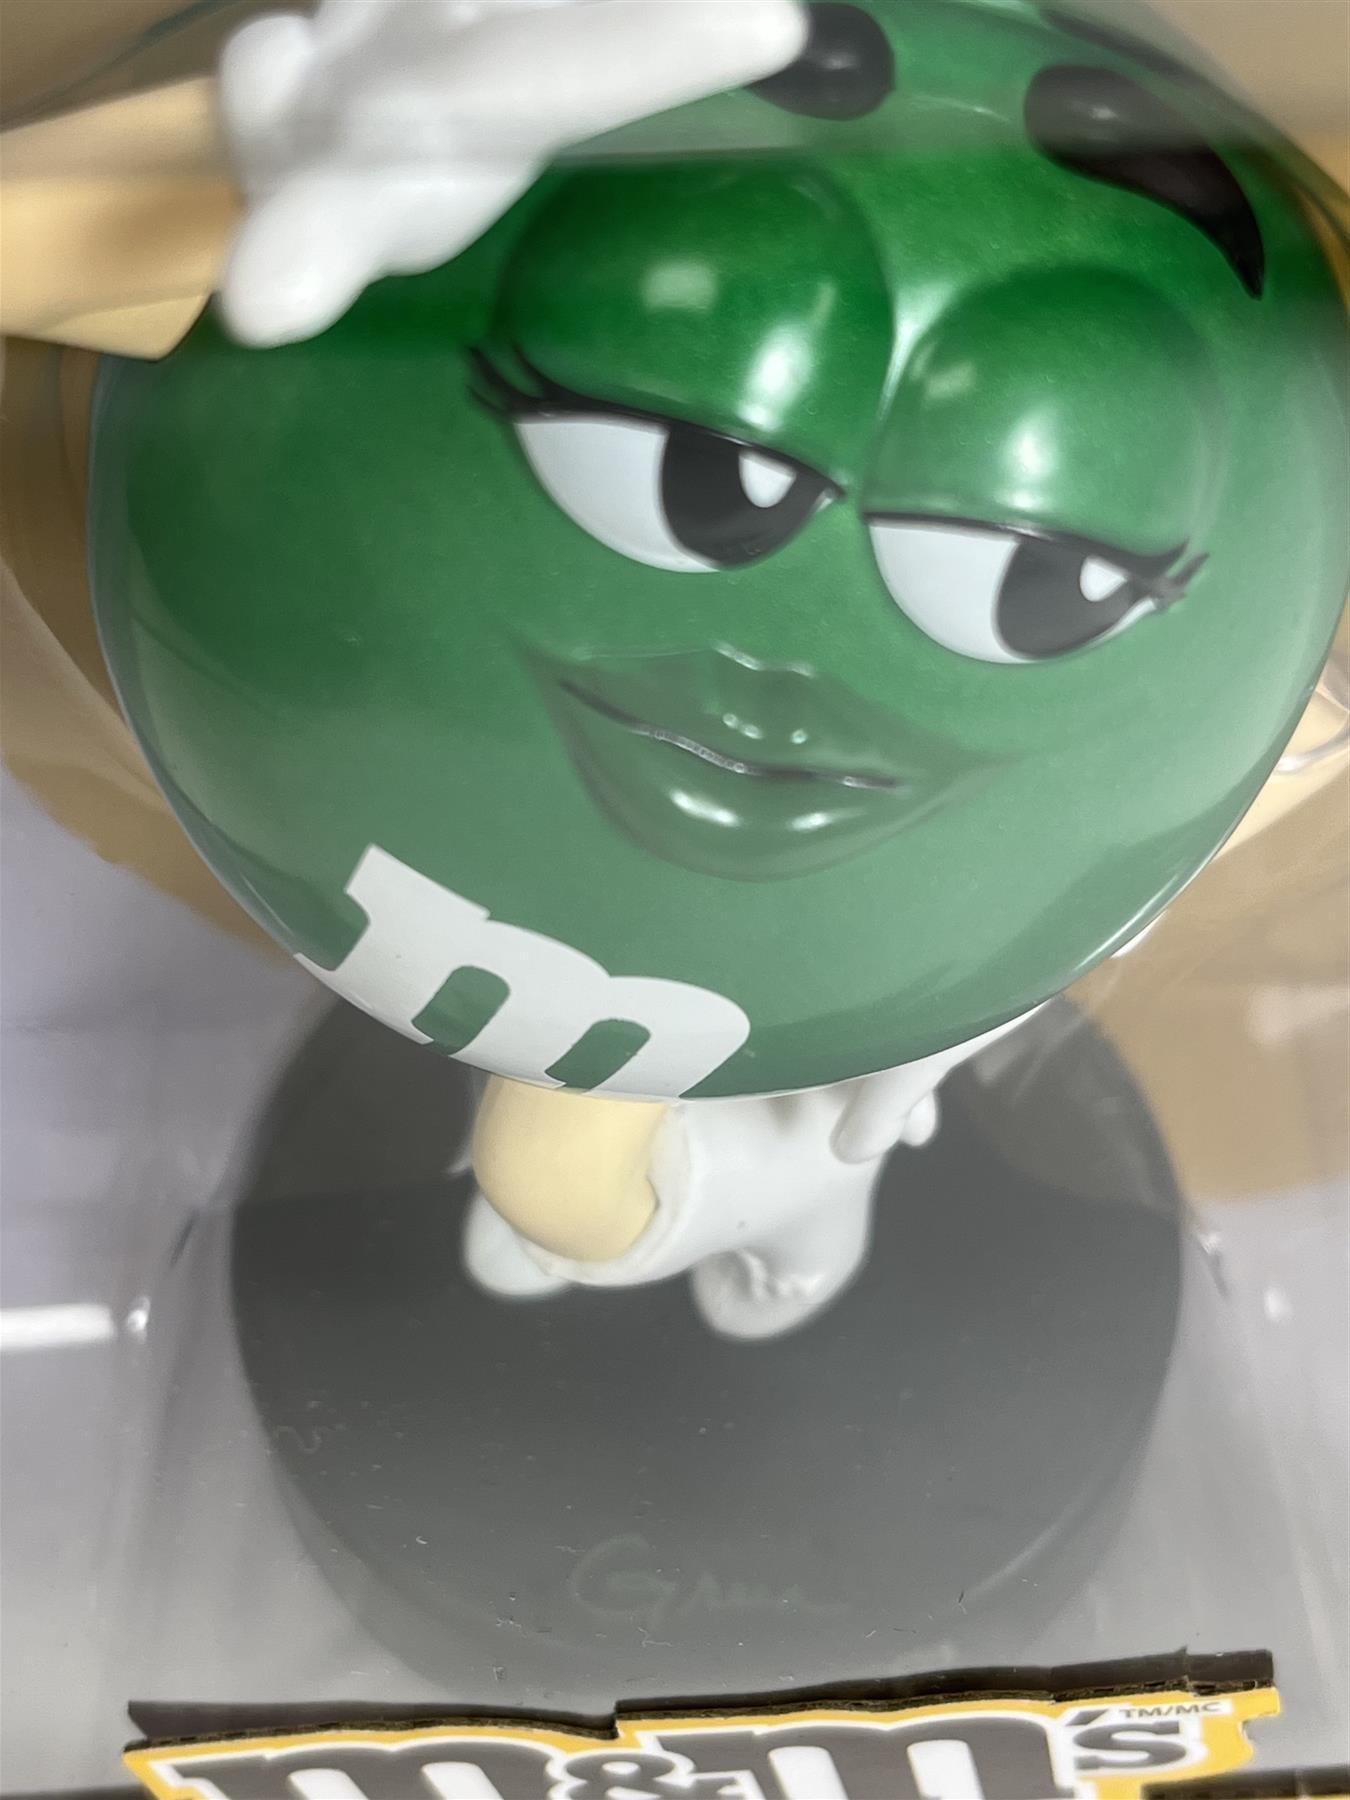  Jada Toys M&M's 4 Green Die-cast Figure (33238) : Toys & Games